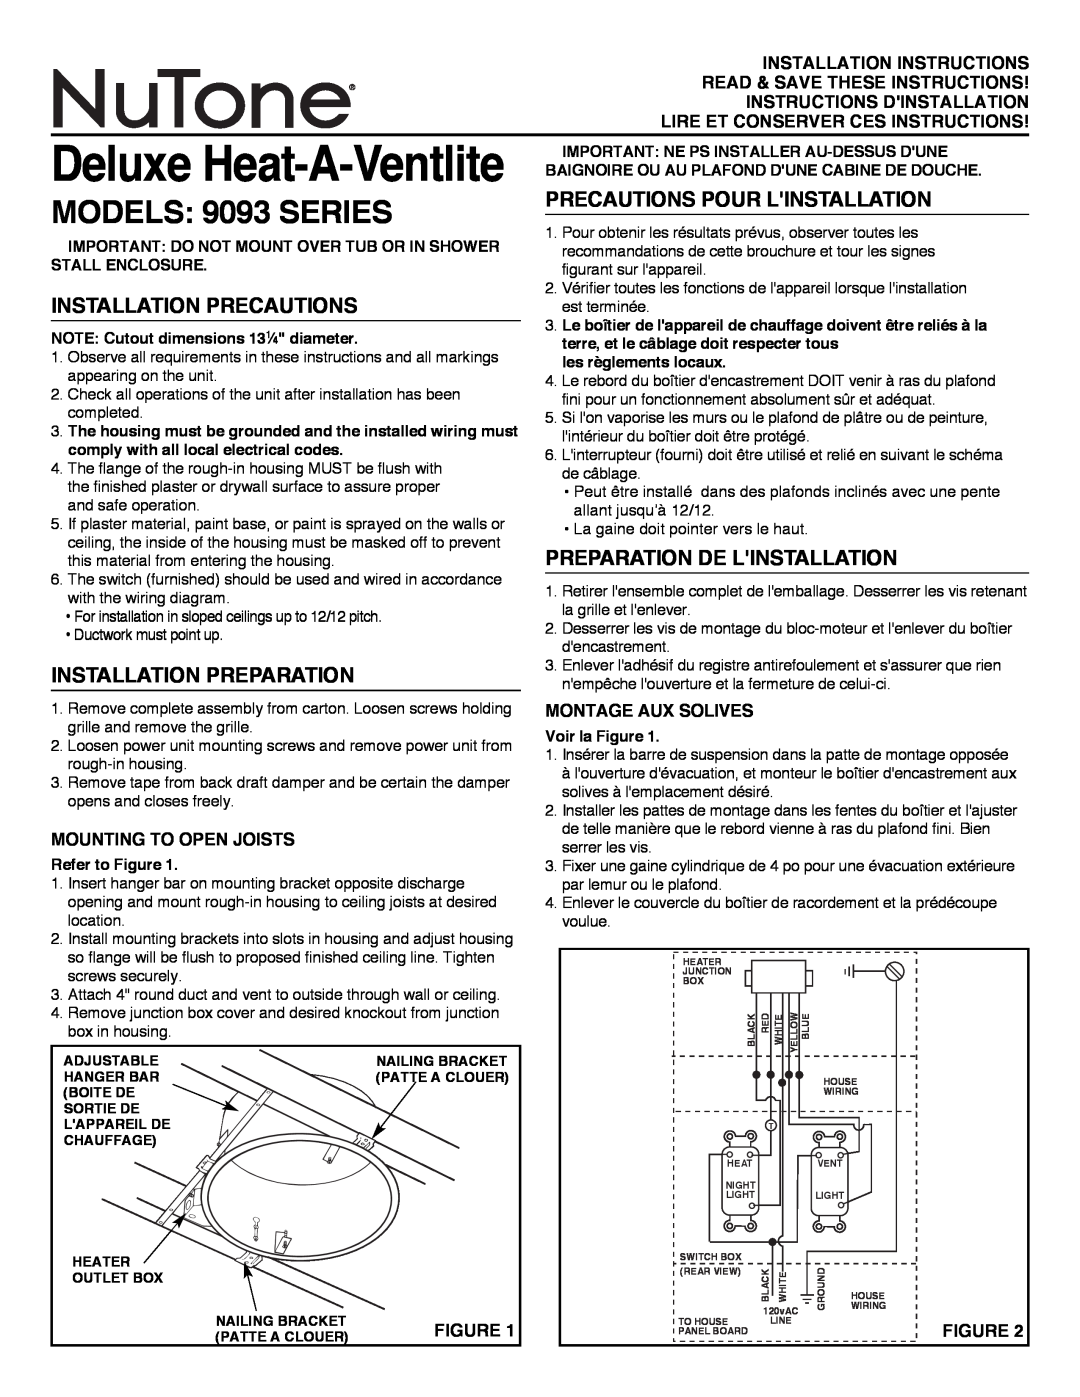 NuTone 9093 installation instructions Precautions Pour Linstallation, Installation Precautions, Installation Preparation 